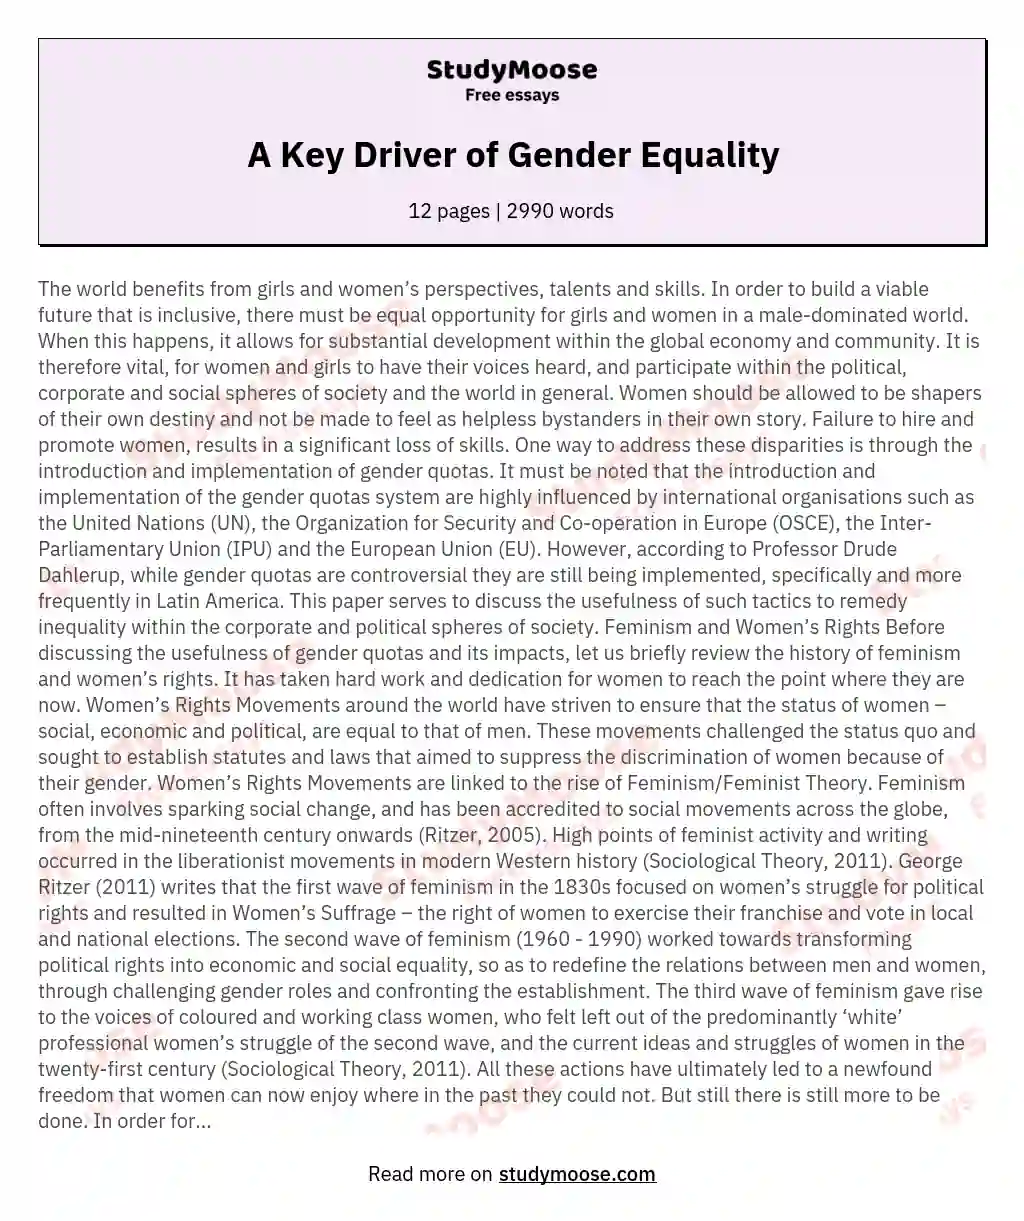 A Key Driver of Gender Equality essay